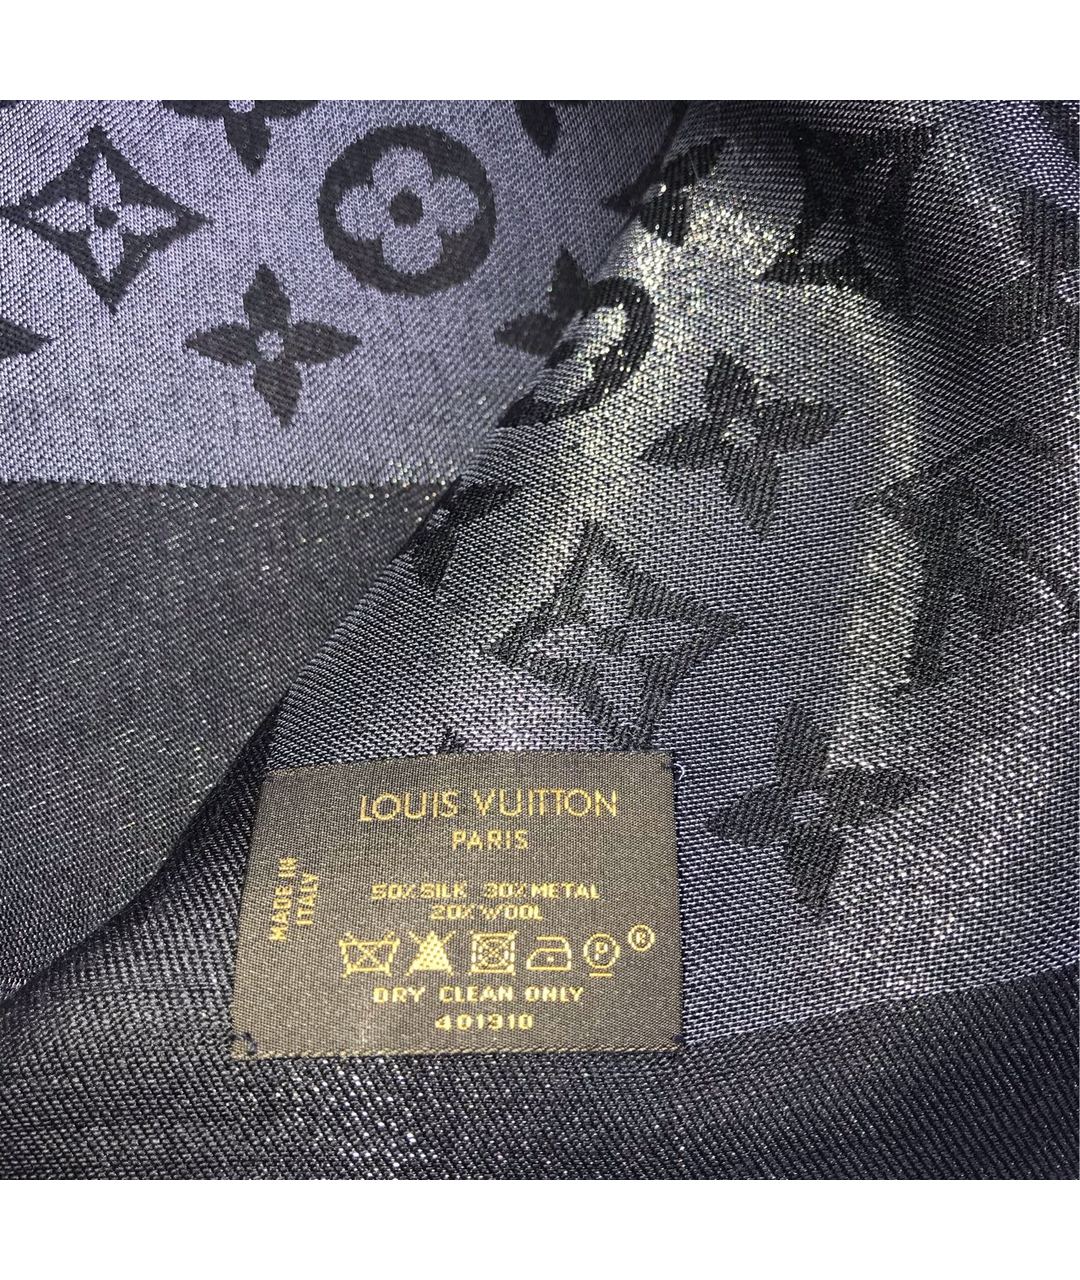 LOUIS VUITTON PRE-OWNED Черный шарф, фото 3